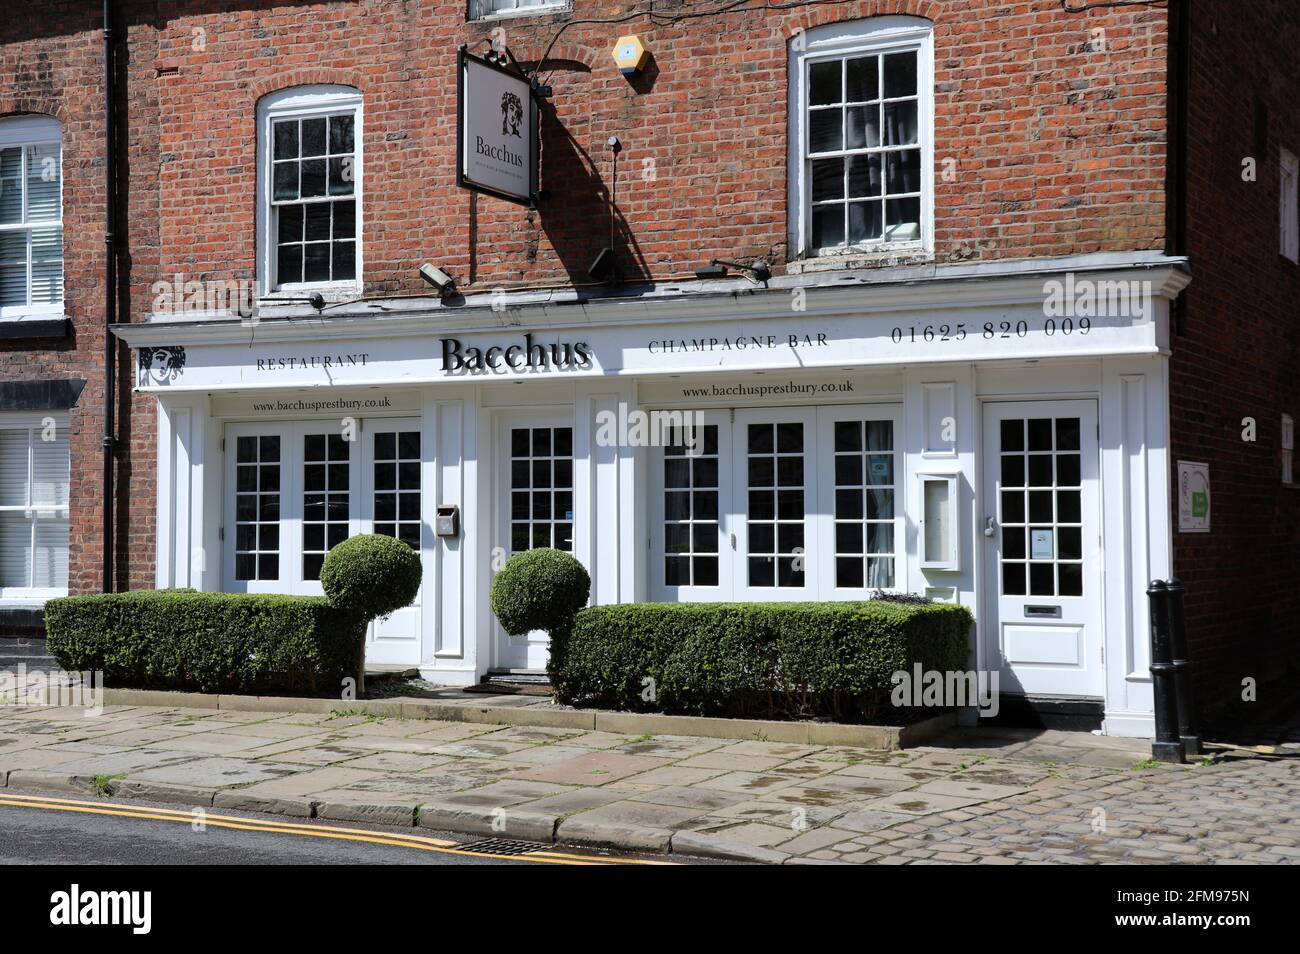 Bacchus restaurant and champagne bar in Prestbury Stock Photo